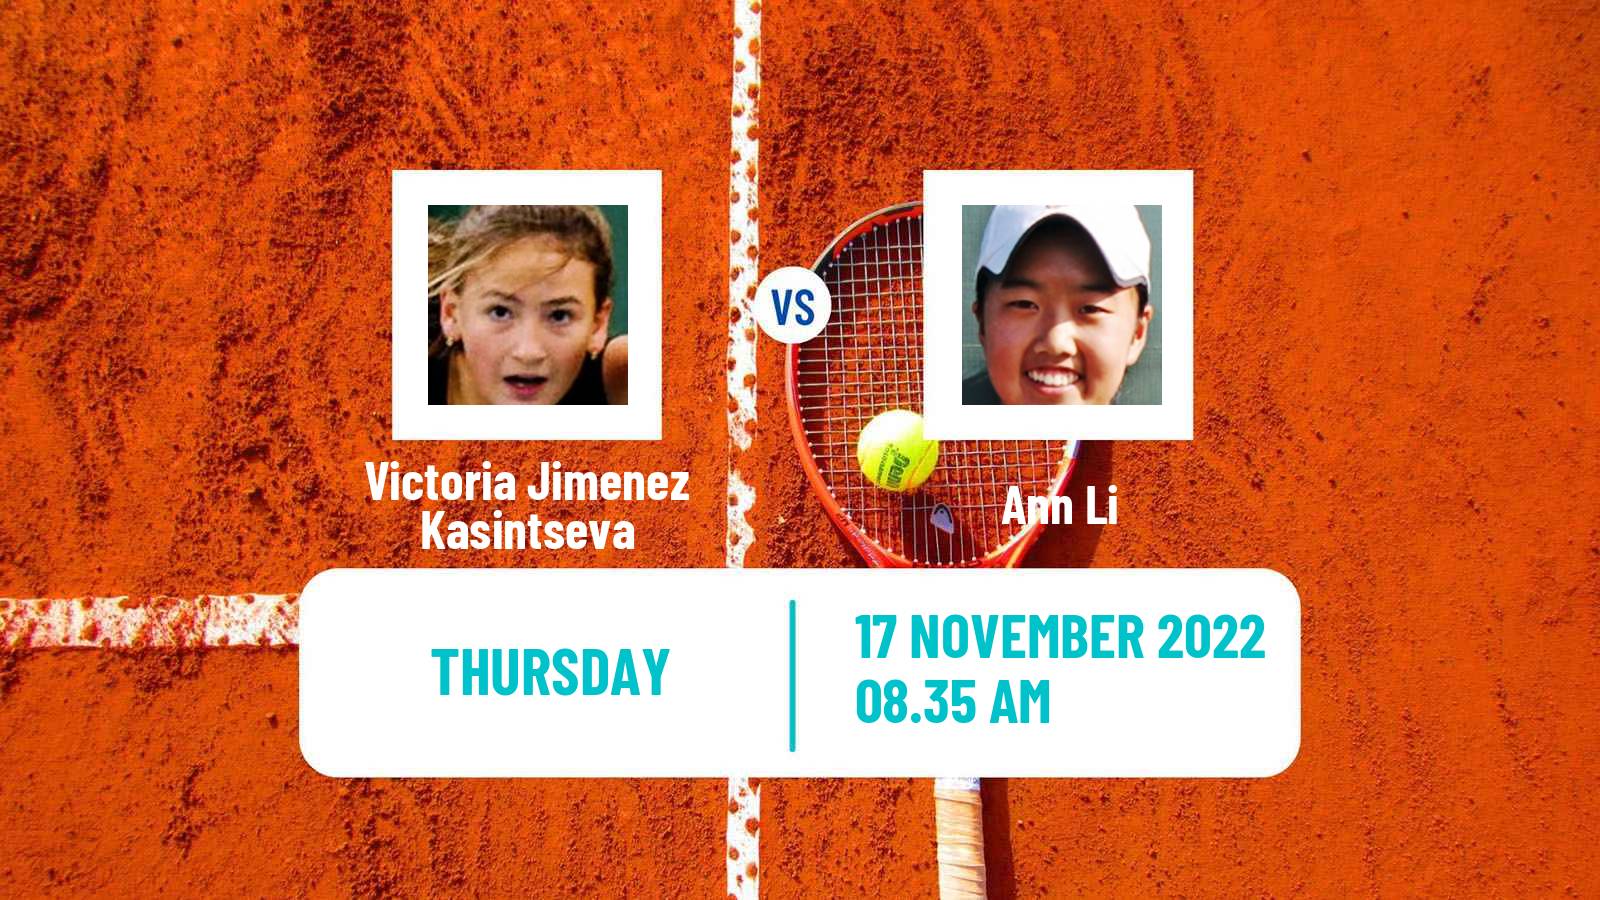 Tennis ATP Challenger Victoria Jimenez Kasintseva - Ann Li